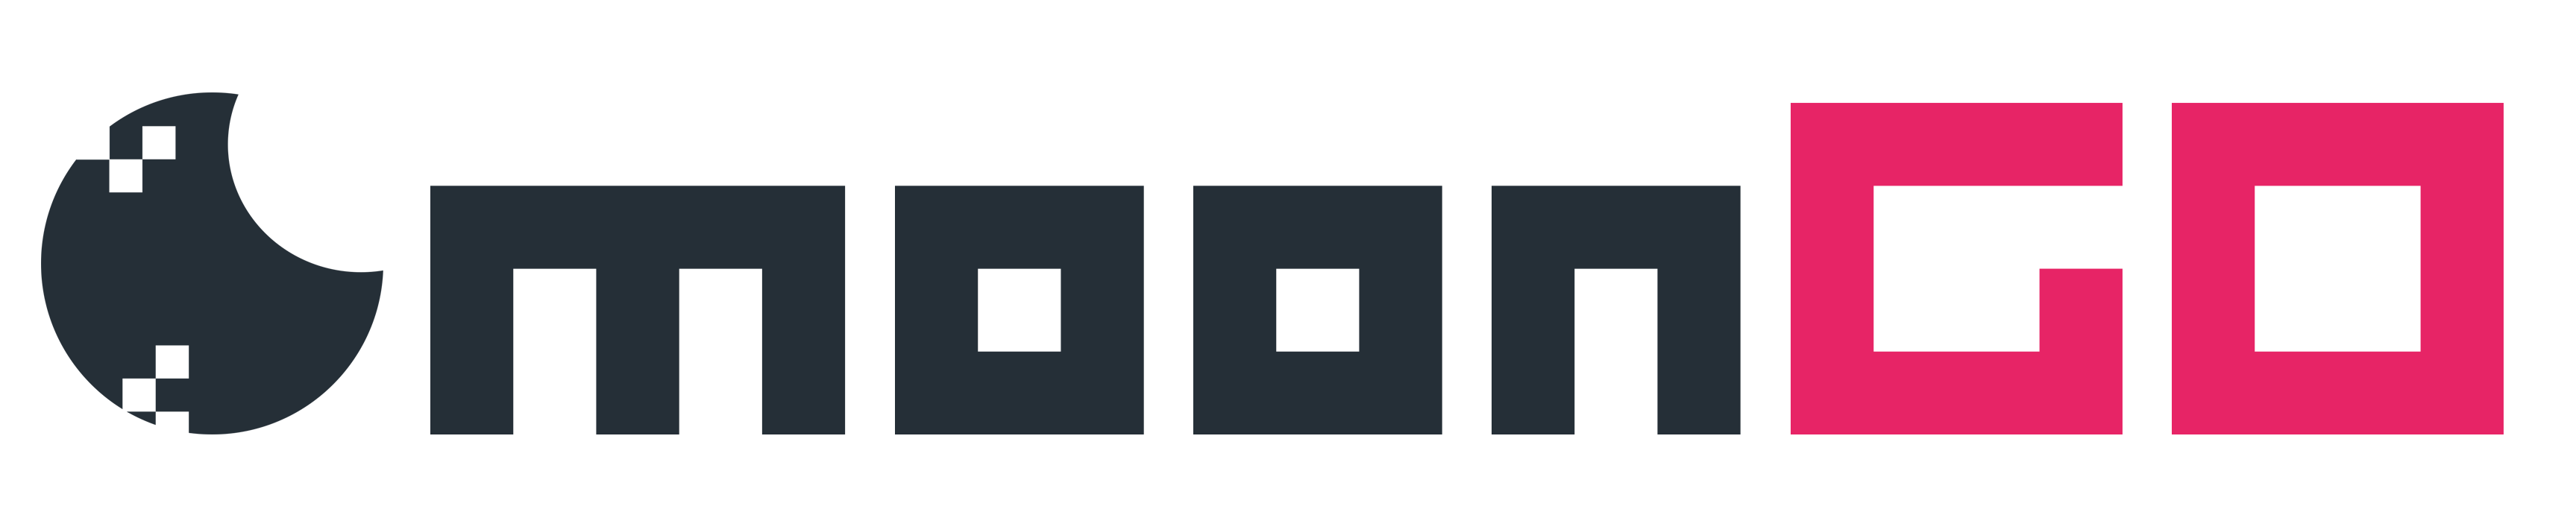 moonGO Crypto App Logo